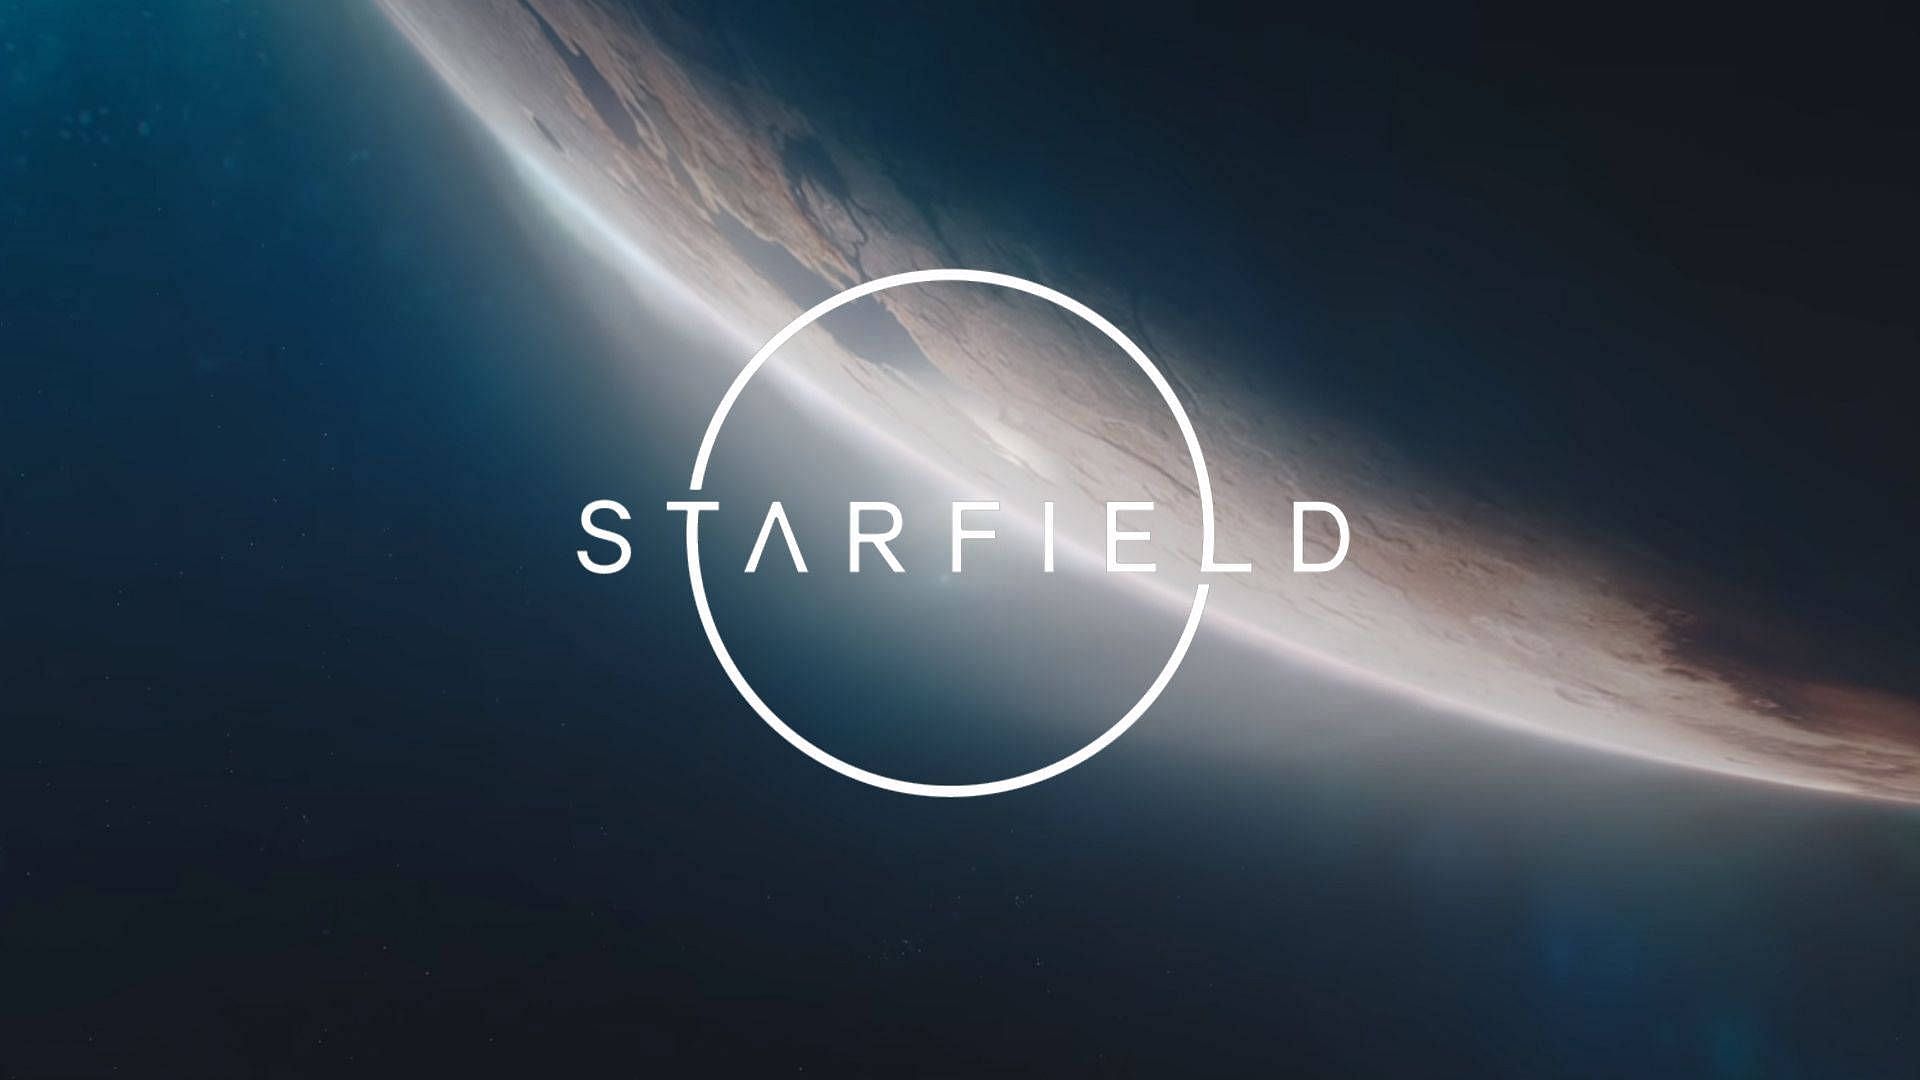 Official artwork for Starfield (Image via Bethesda Game Studios)